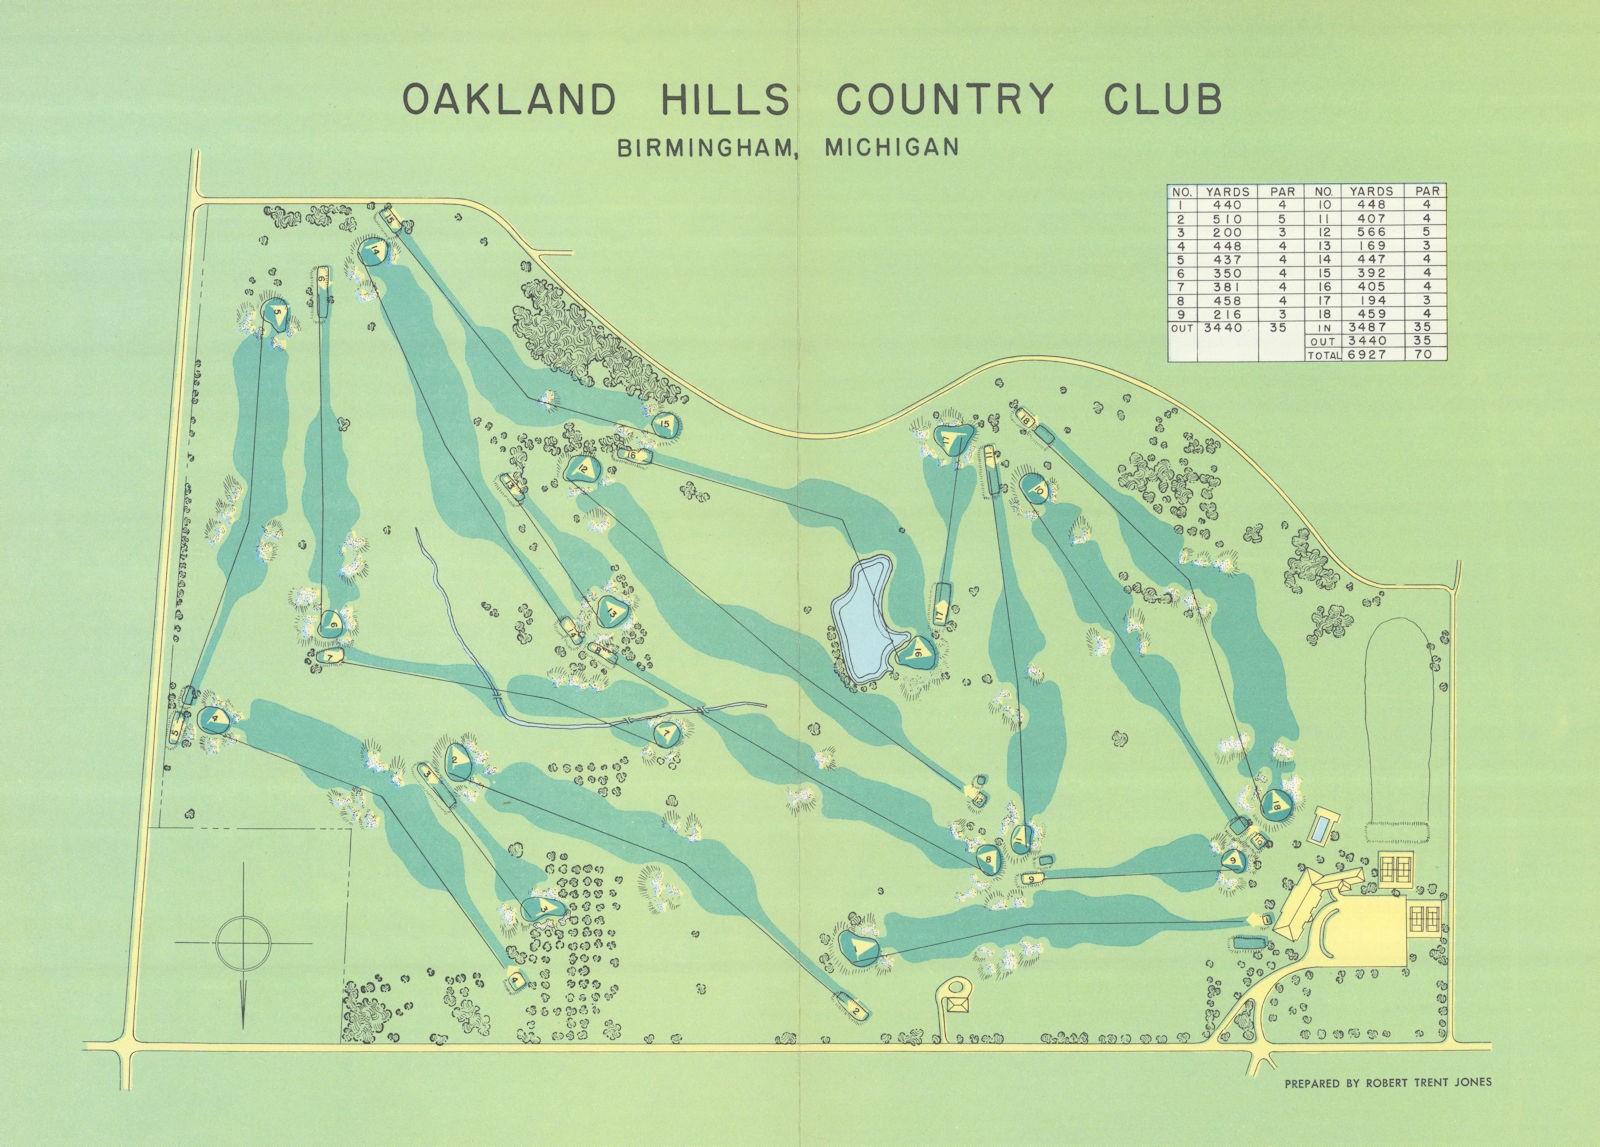 Oakland Hills Country Club Michigan Robert Trent Jones golf course plan 1954 map